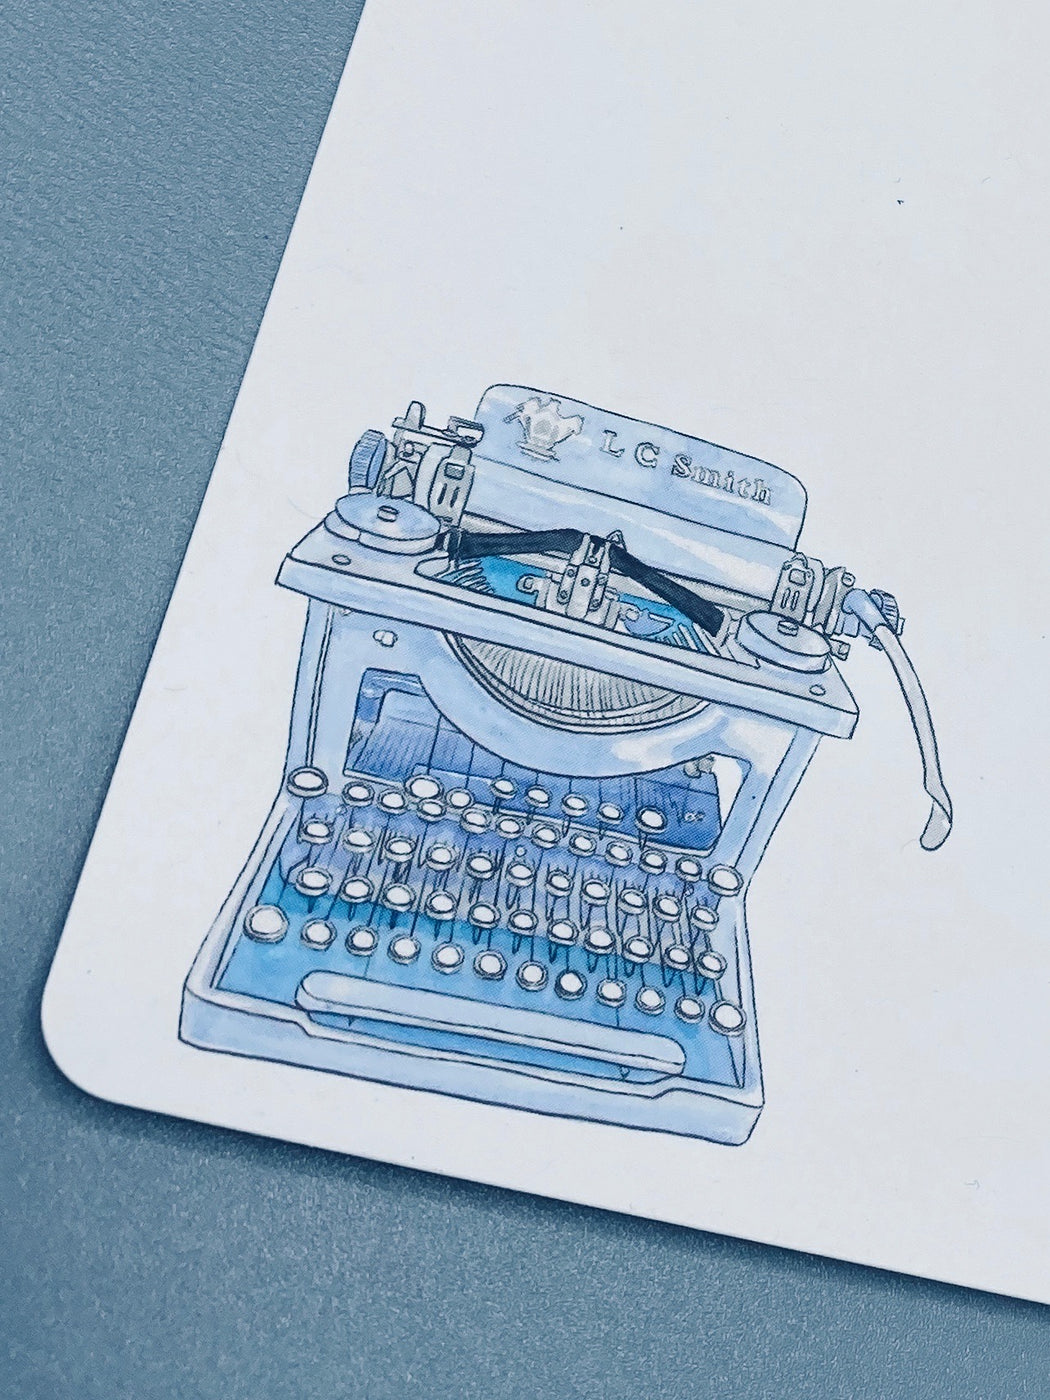 Notecard illustration of a blue typewriter